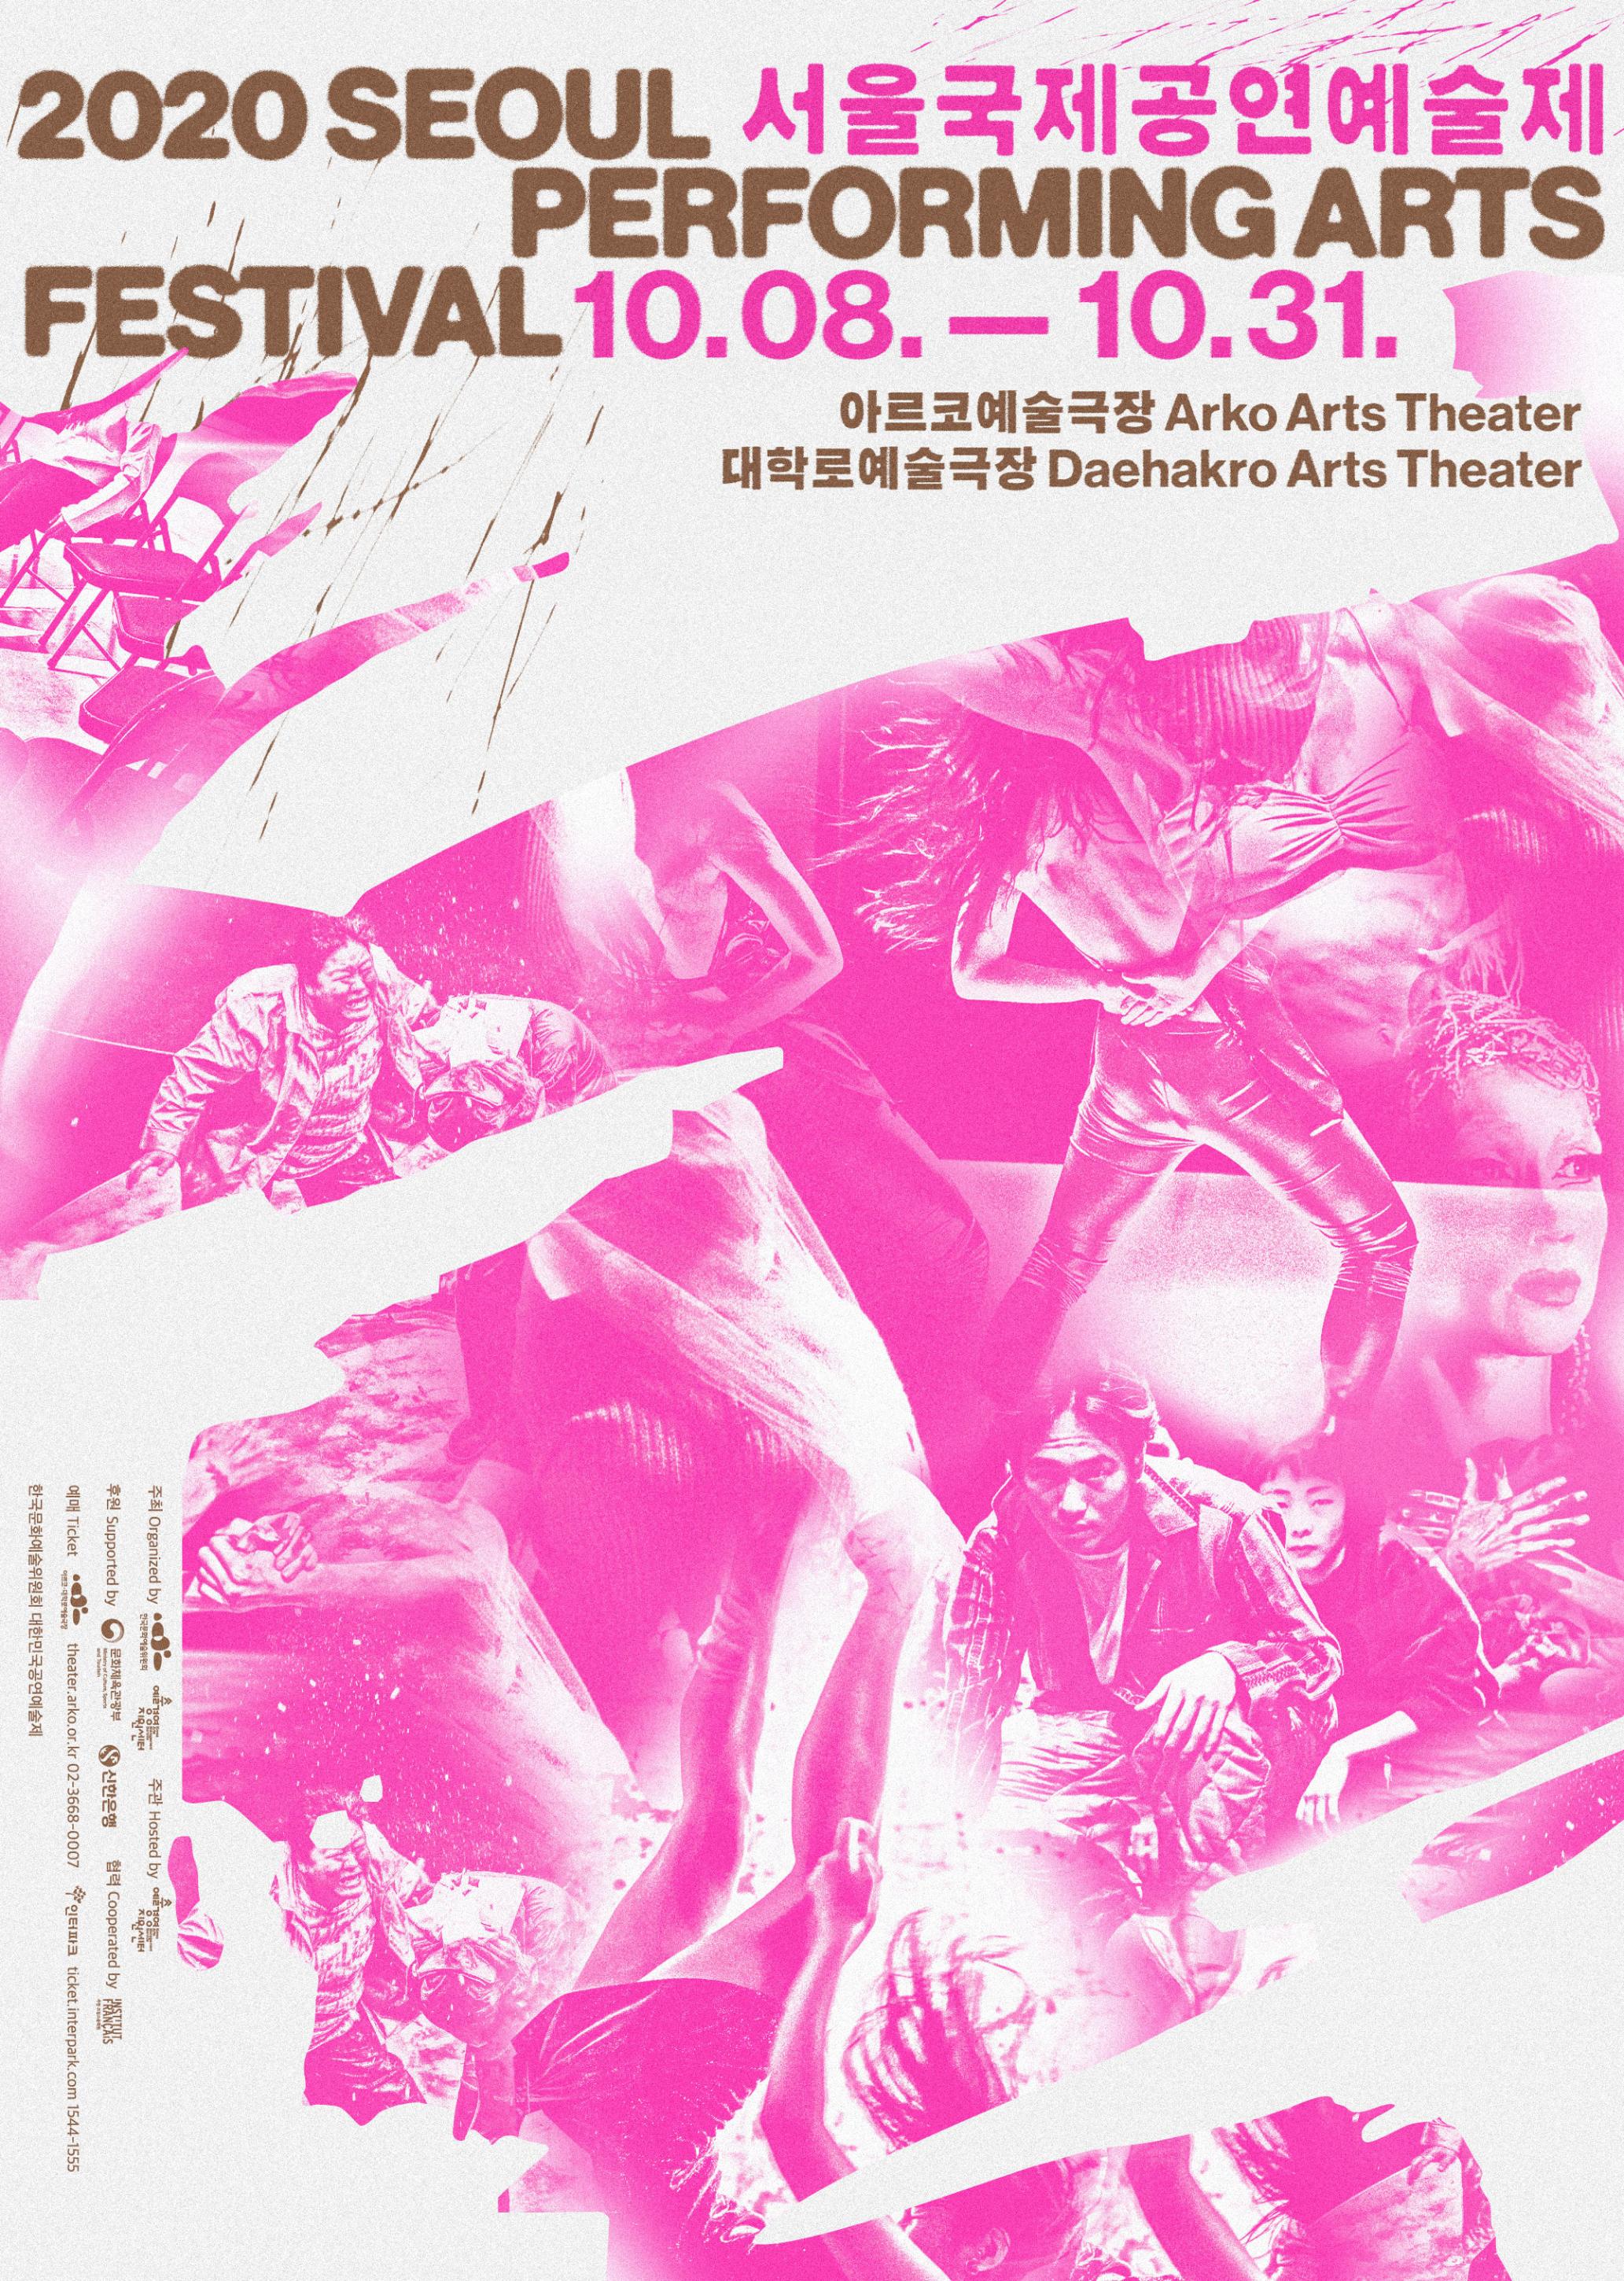 <h1>2020 SEOUL 서울국제공연예술제 PERFORMING ARTS FESTIVAL 10.08.-10.31</h1>
<p>아르코예술극장 Arko Arts Theater</p>
<p>대학로예술극장 Daehakro Arts Theater</p>